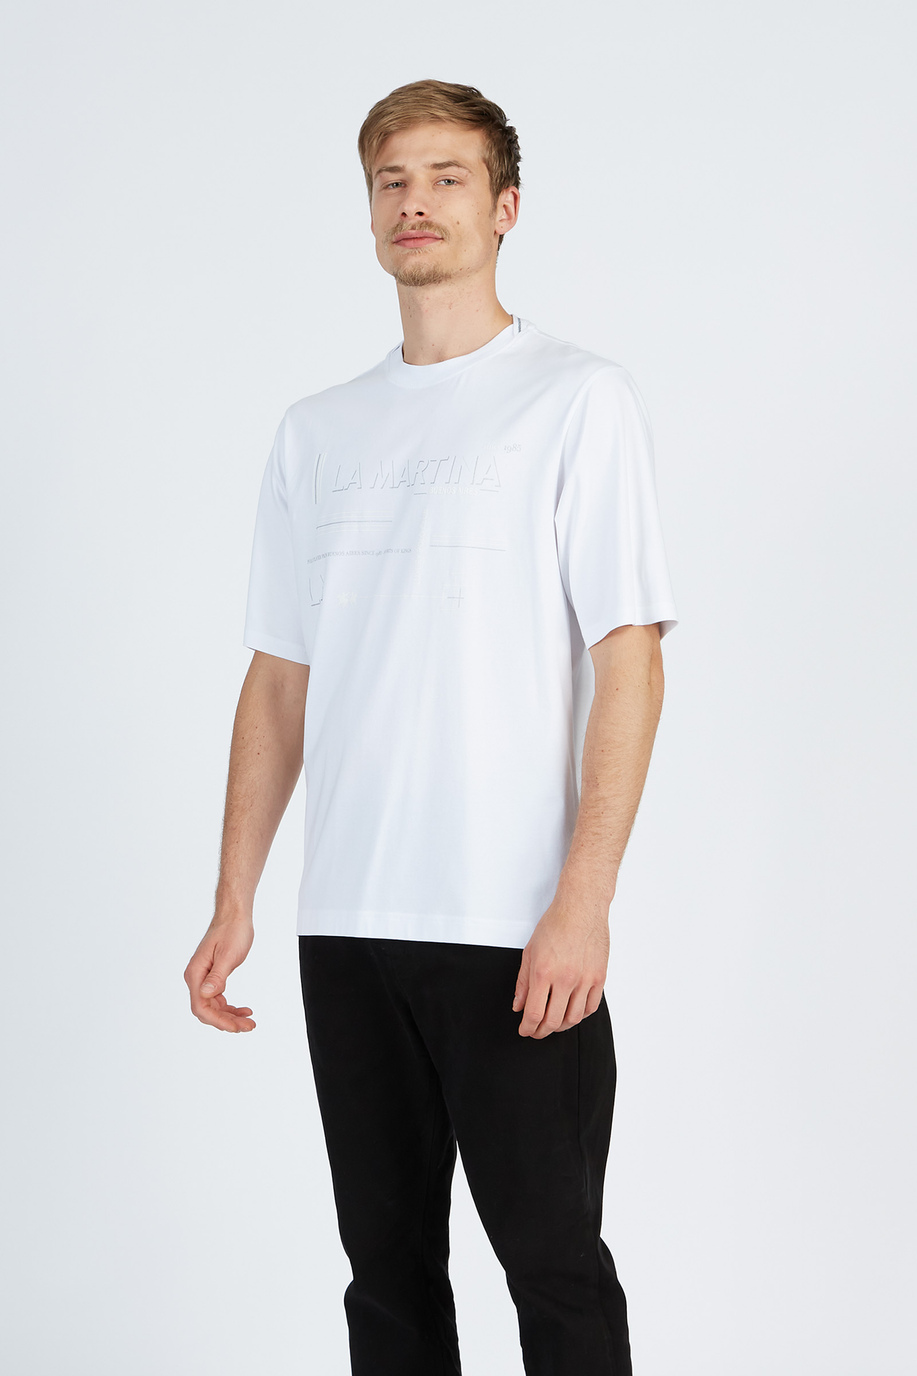 Men’s short-sleeved round neck stretch cotton t-shirt with regular fit - Jet Set | La Martina - Official Online Shop